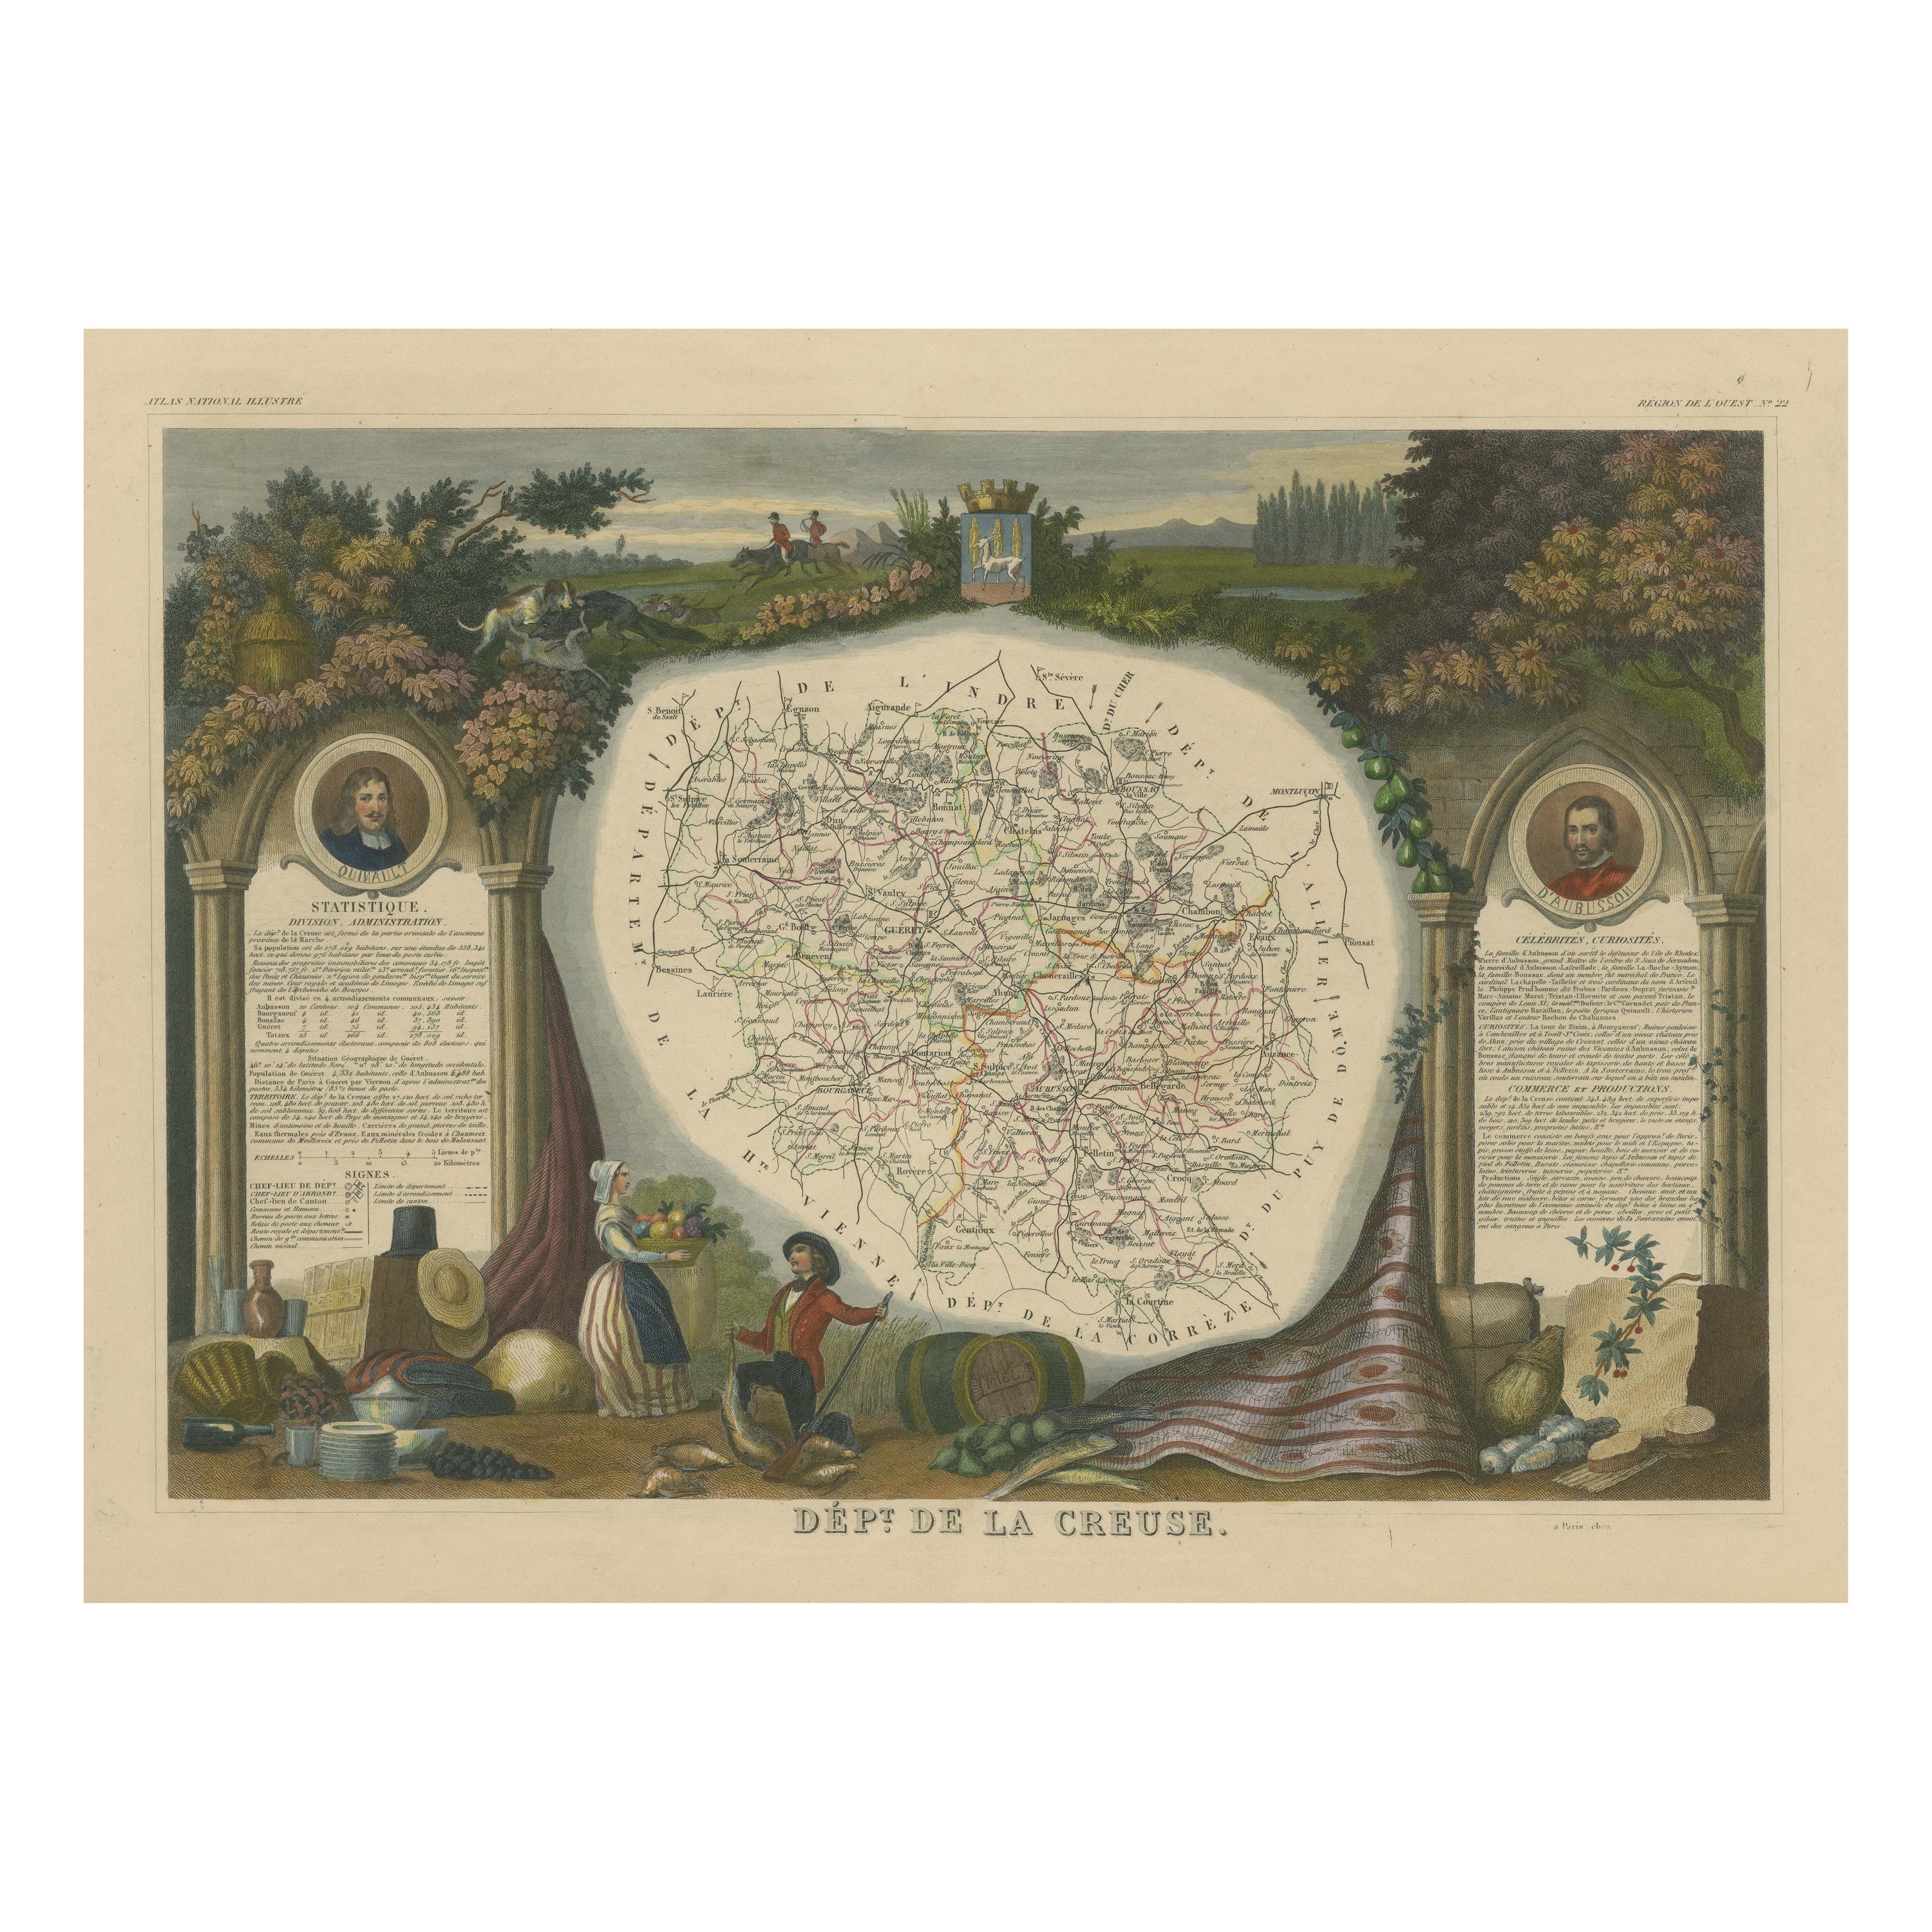 Handkolorierte antike Karte des Departements Creuse, Frankreich